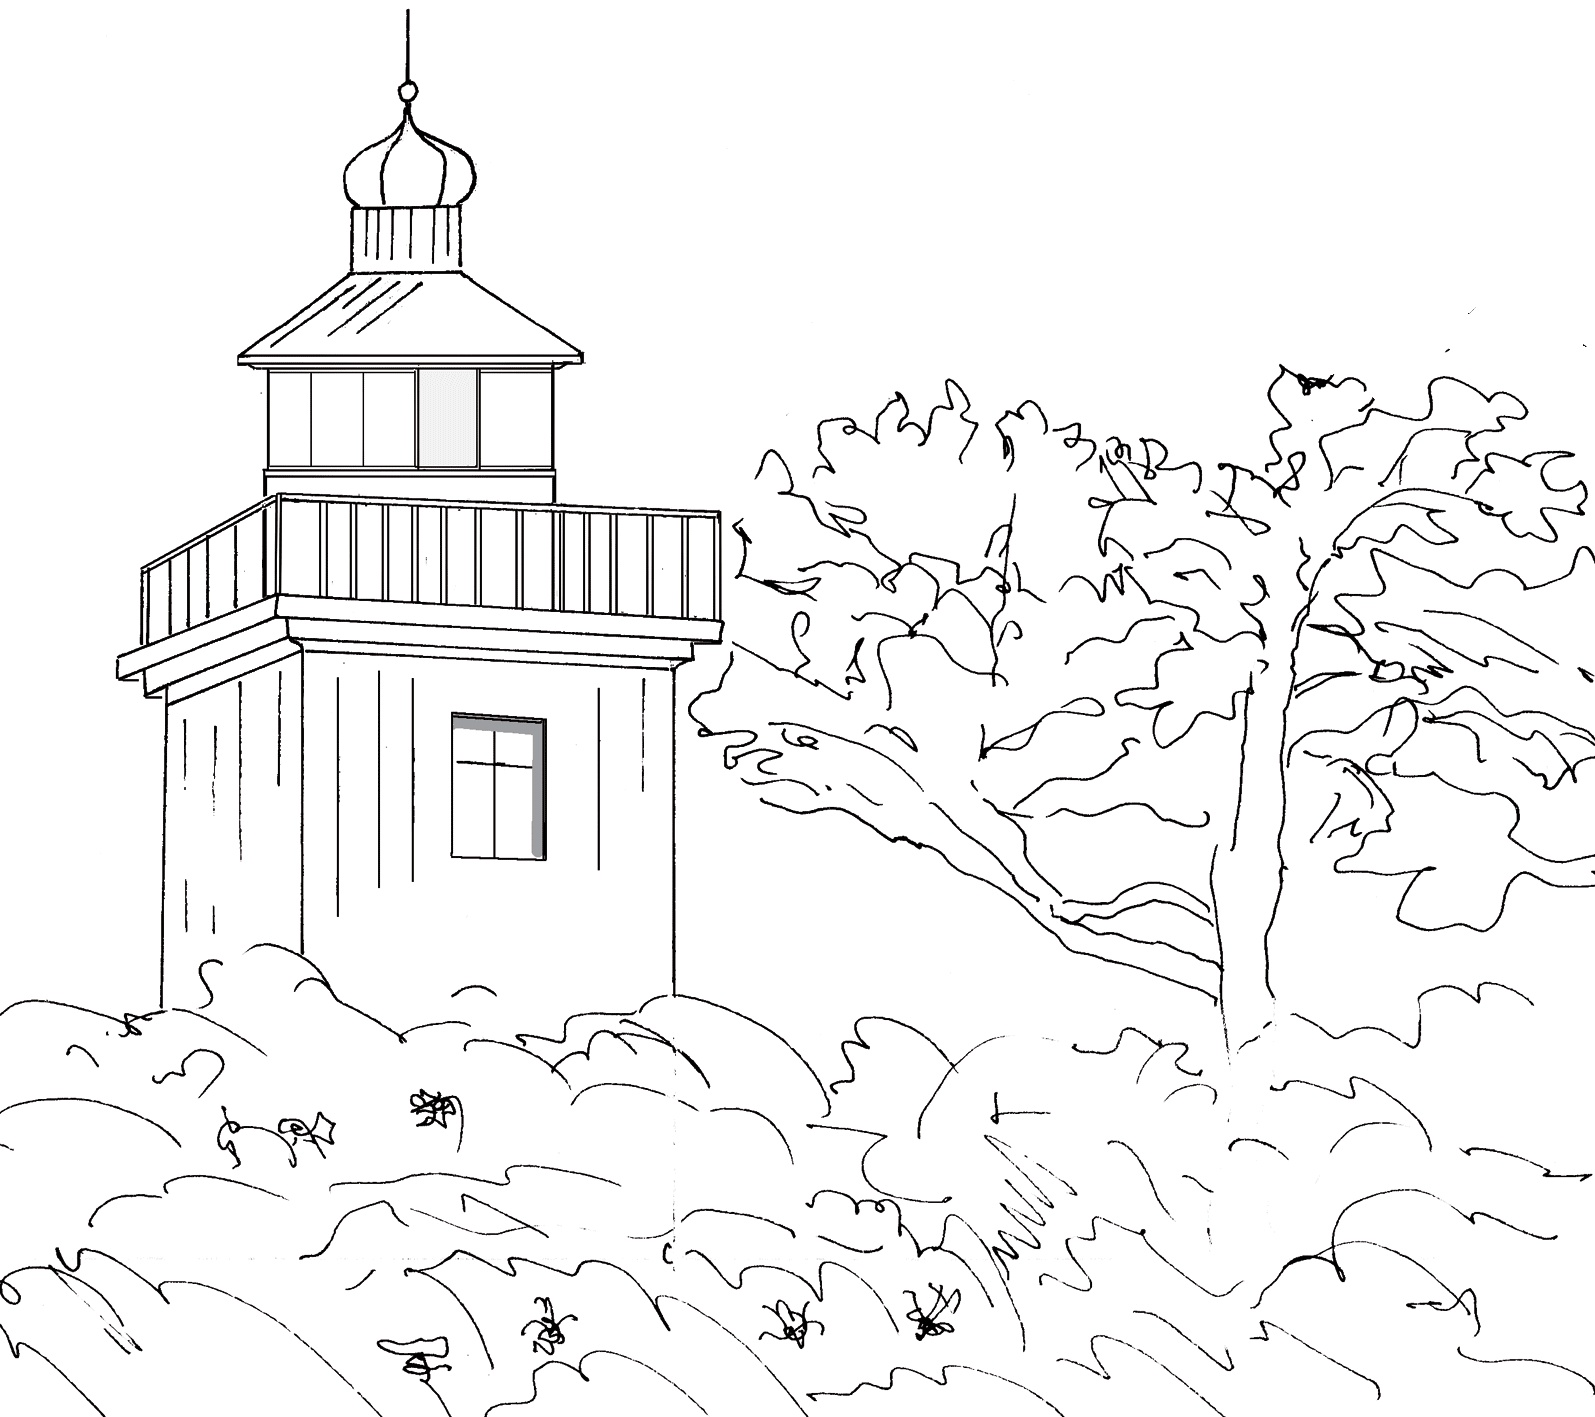 Spodsbjerg - Leuchtturm - Leuchtturm bei Hundested